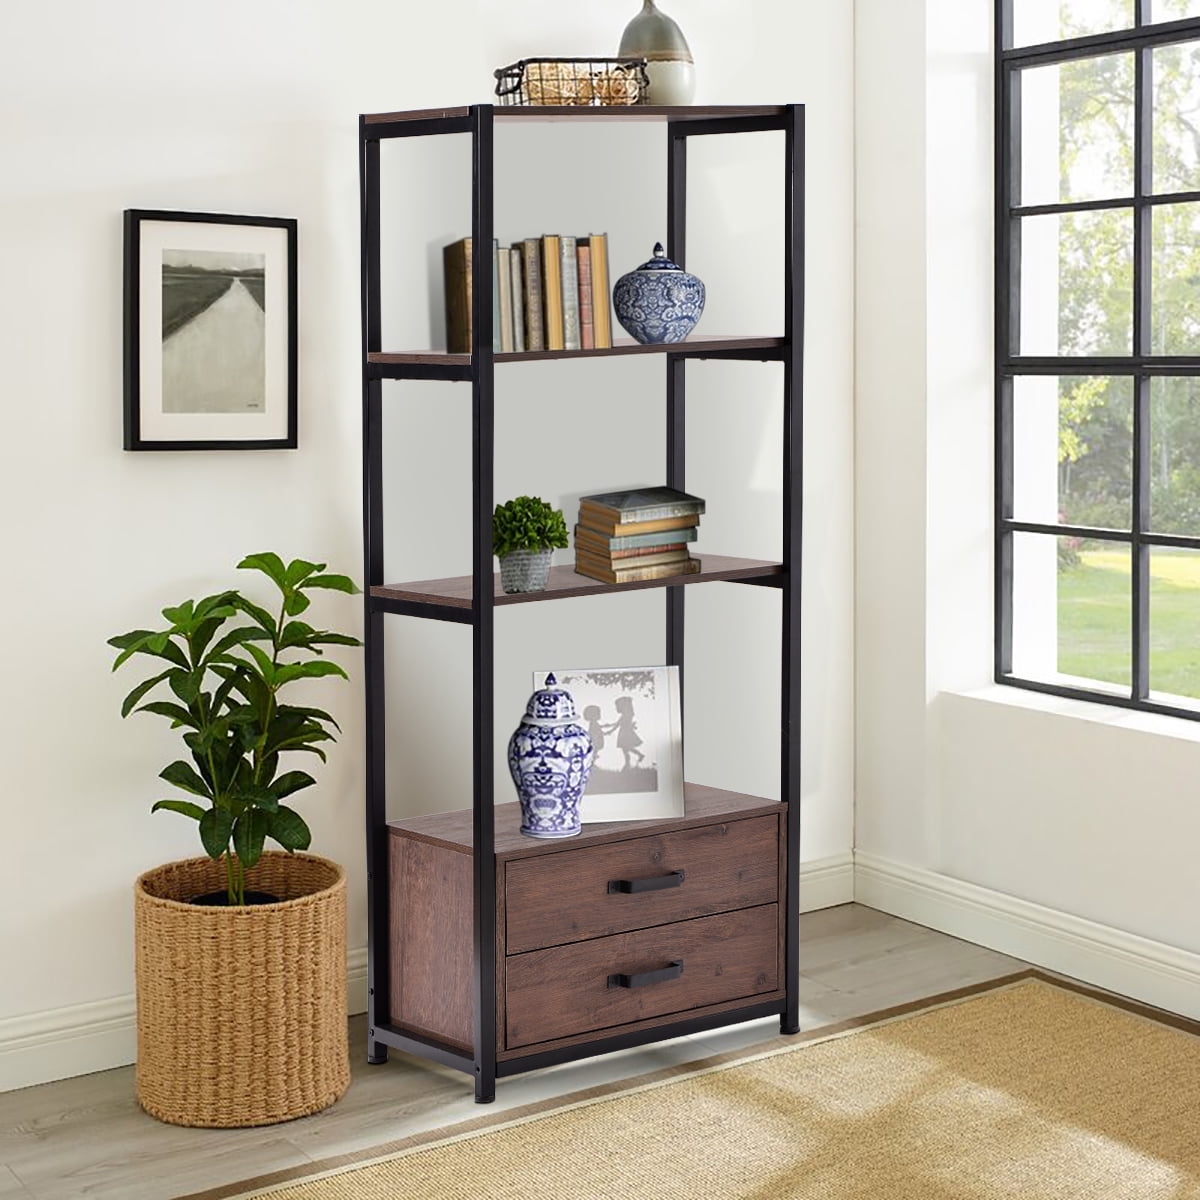 Home Office Umi  Brand 4 Tier Tree Desktop Bookshelf,Multi-Tier Floor Free Standing Wood Display Storage Bookcase,Magazine Rack for Living Room